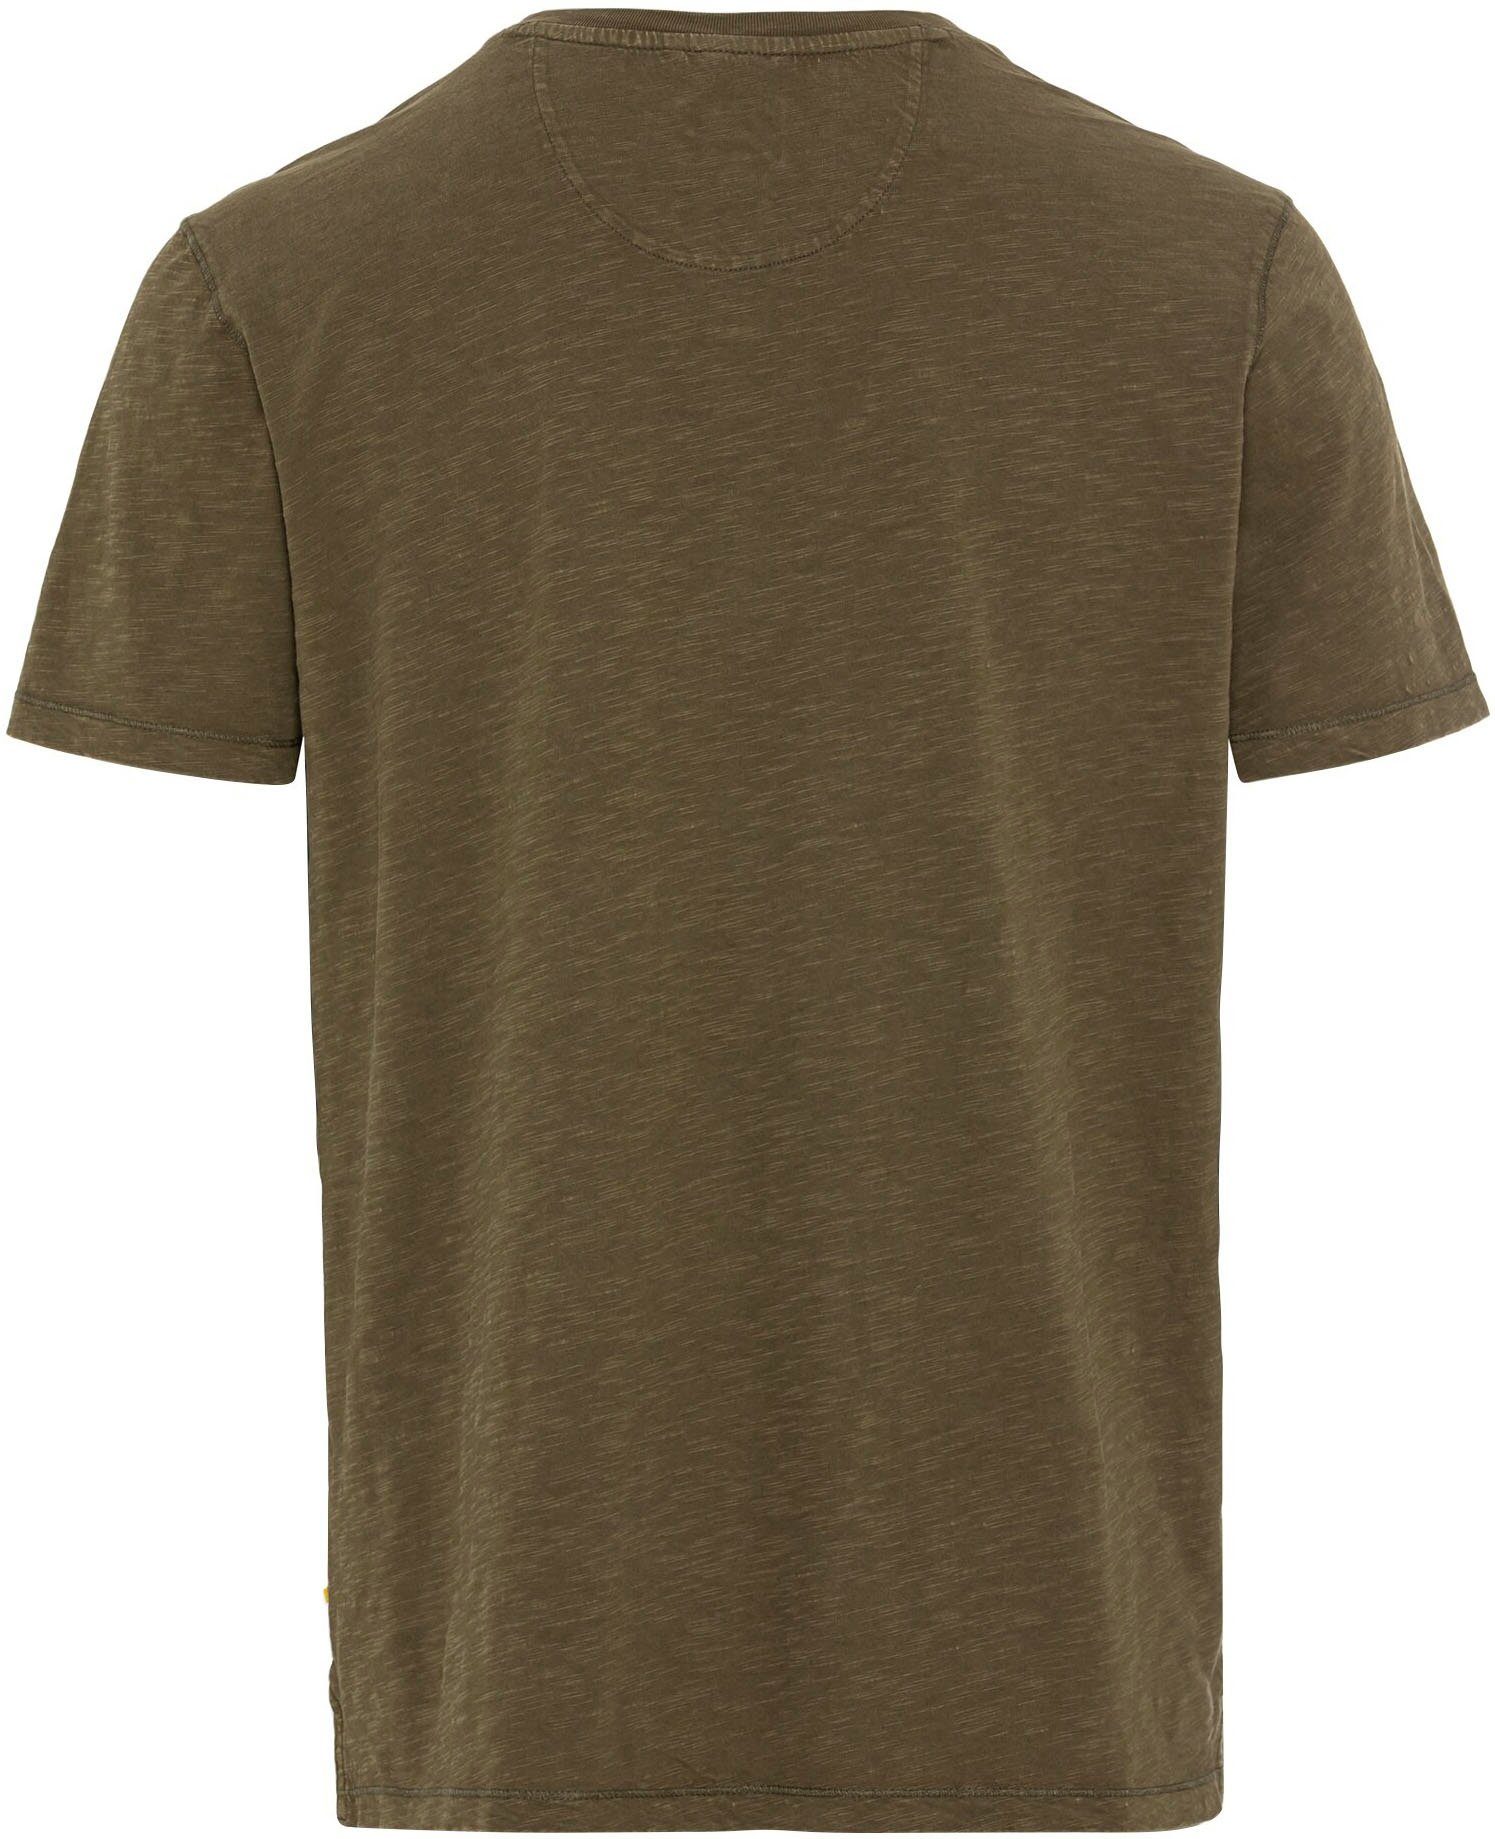 camel active T-Shirt mit Knopfleiste olive brown